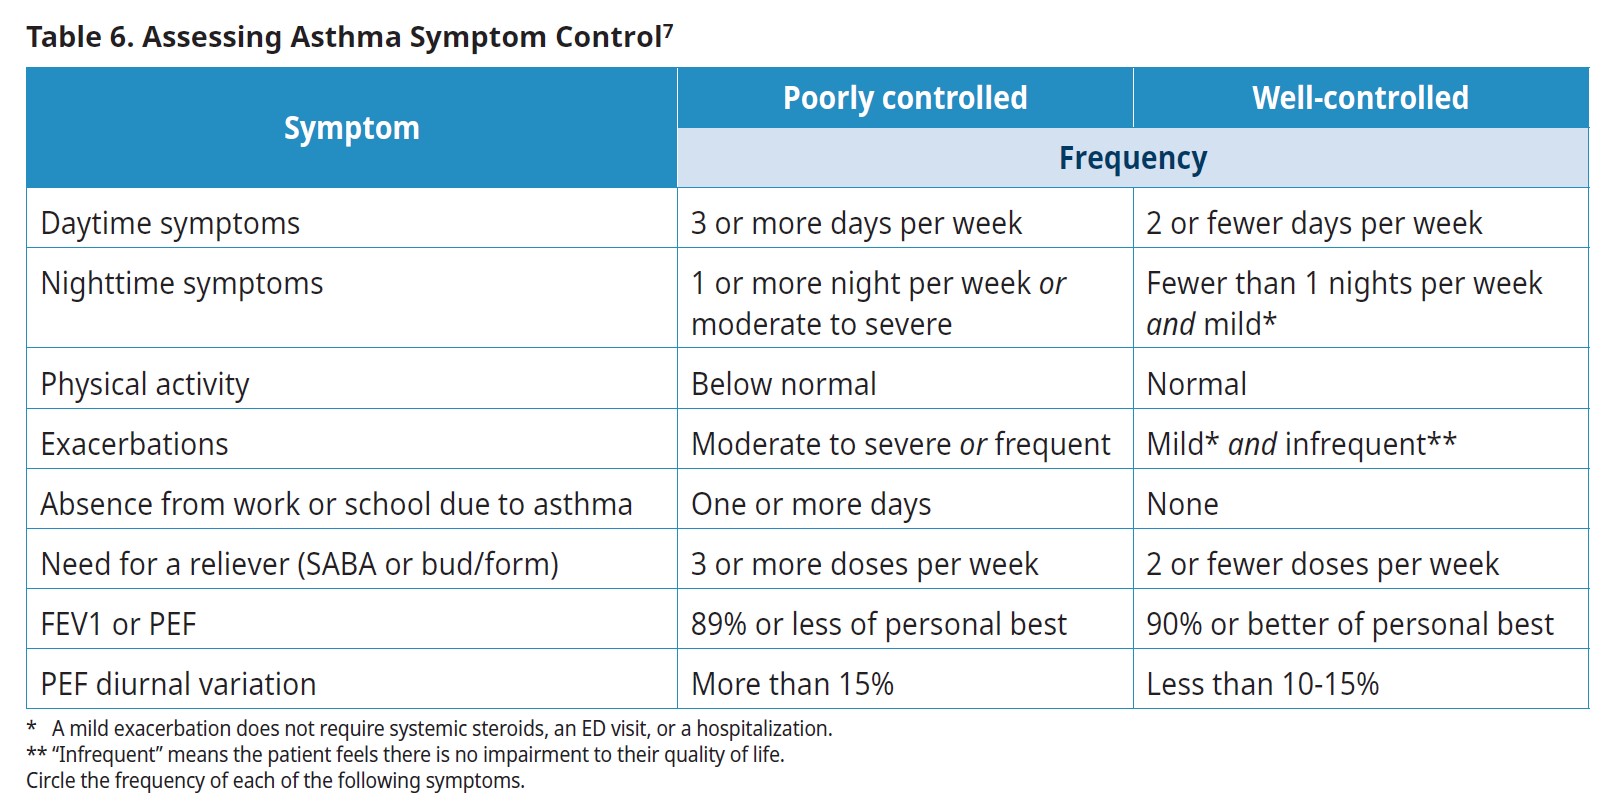 Assessing Asthma Symptom Control